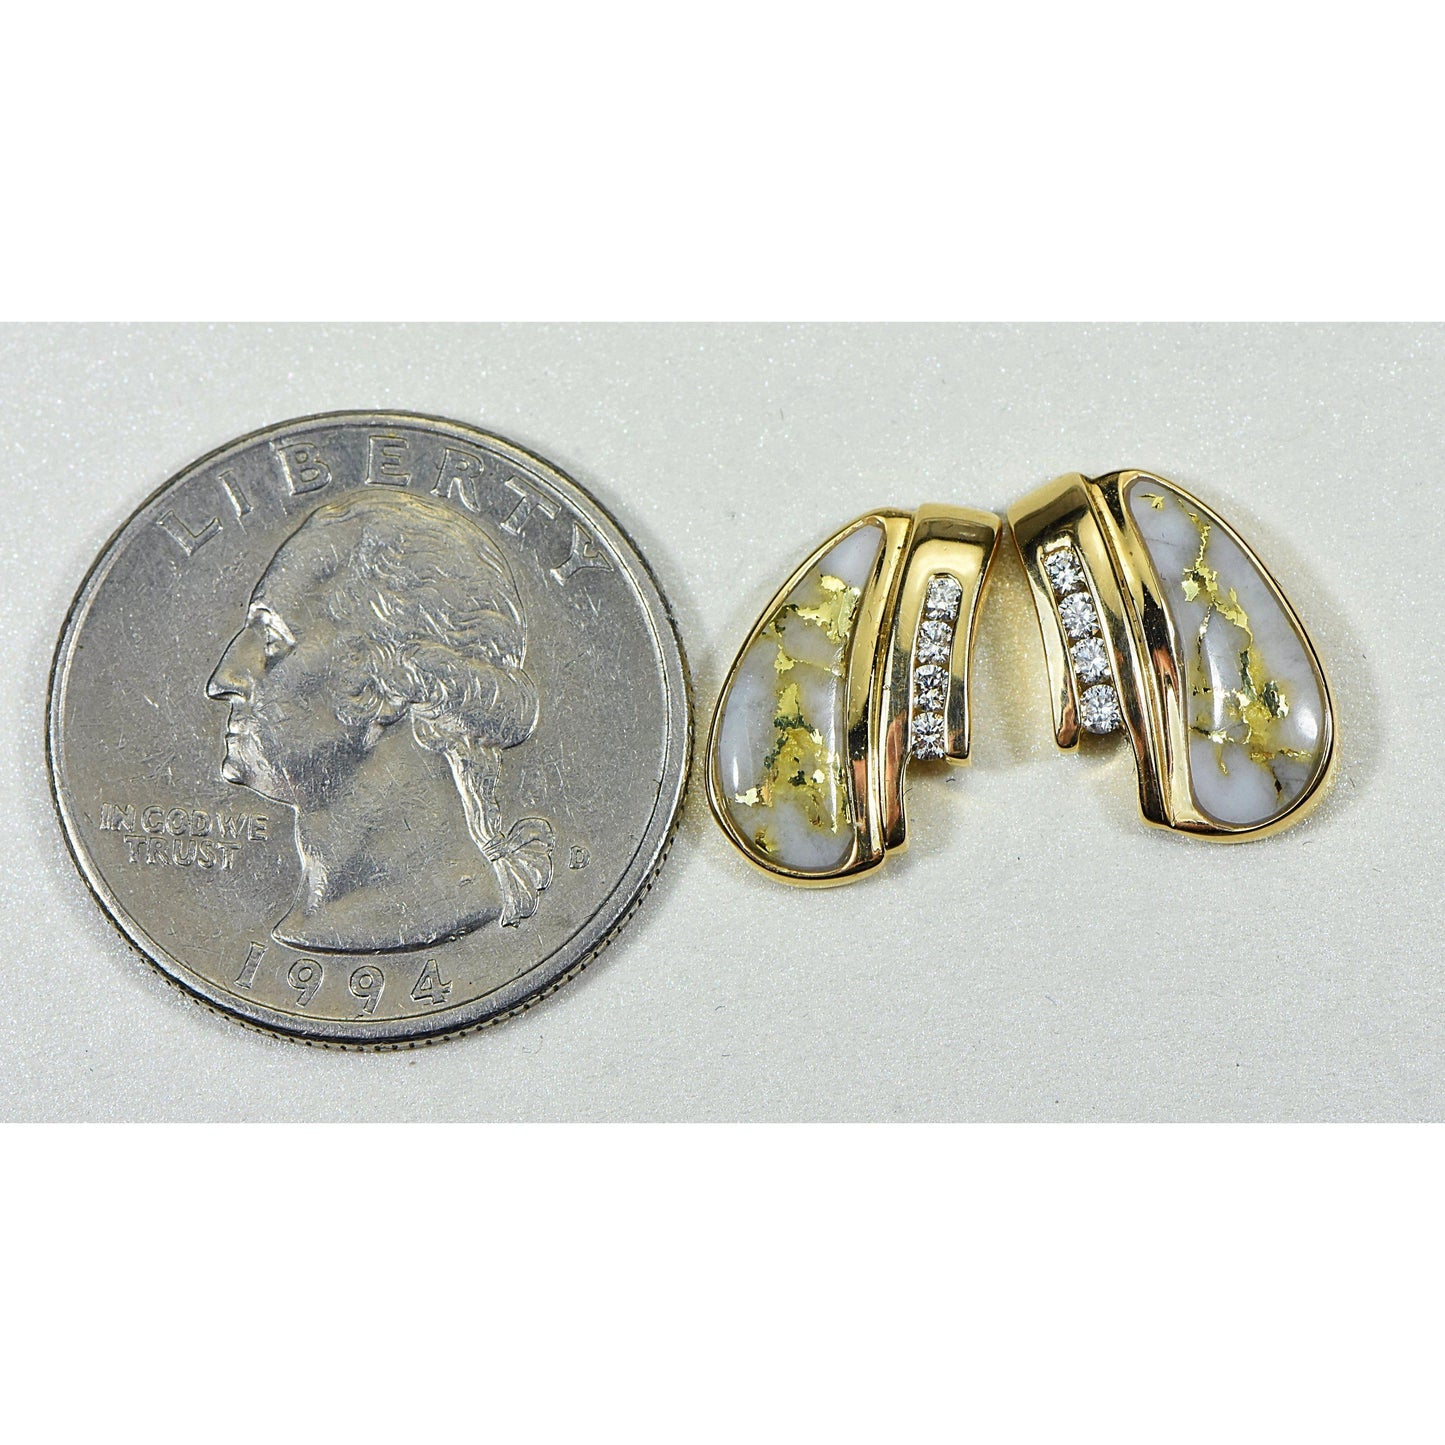 Gold Quartz Earrings Post Backs with Diamonds - EDL47D16Q-Destination Gold Detectors